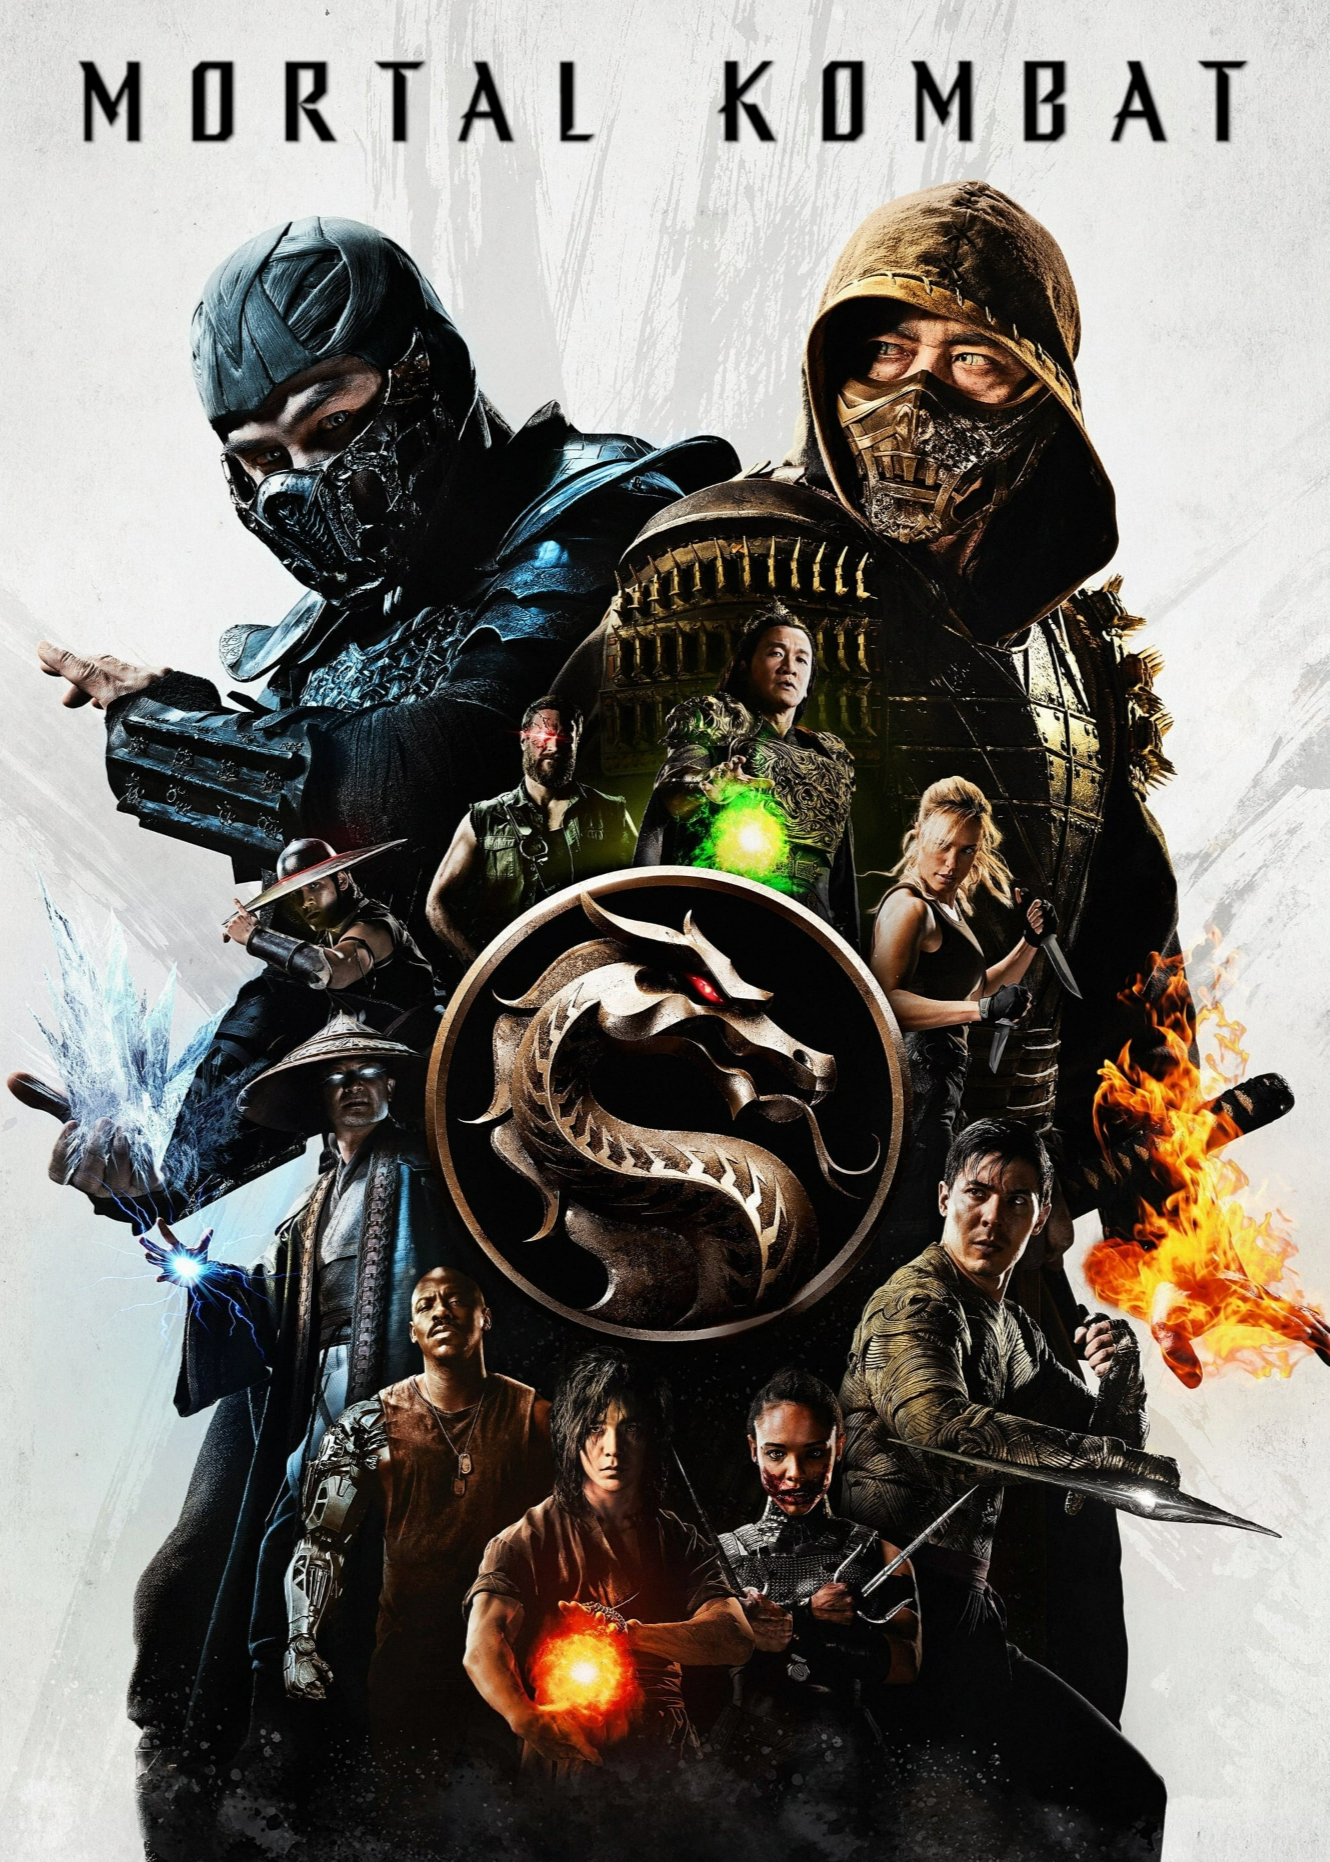 Poster Phim Mortal Kombat: Đấu Trường Sinh Tử (Mortal Kombat)